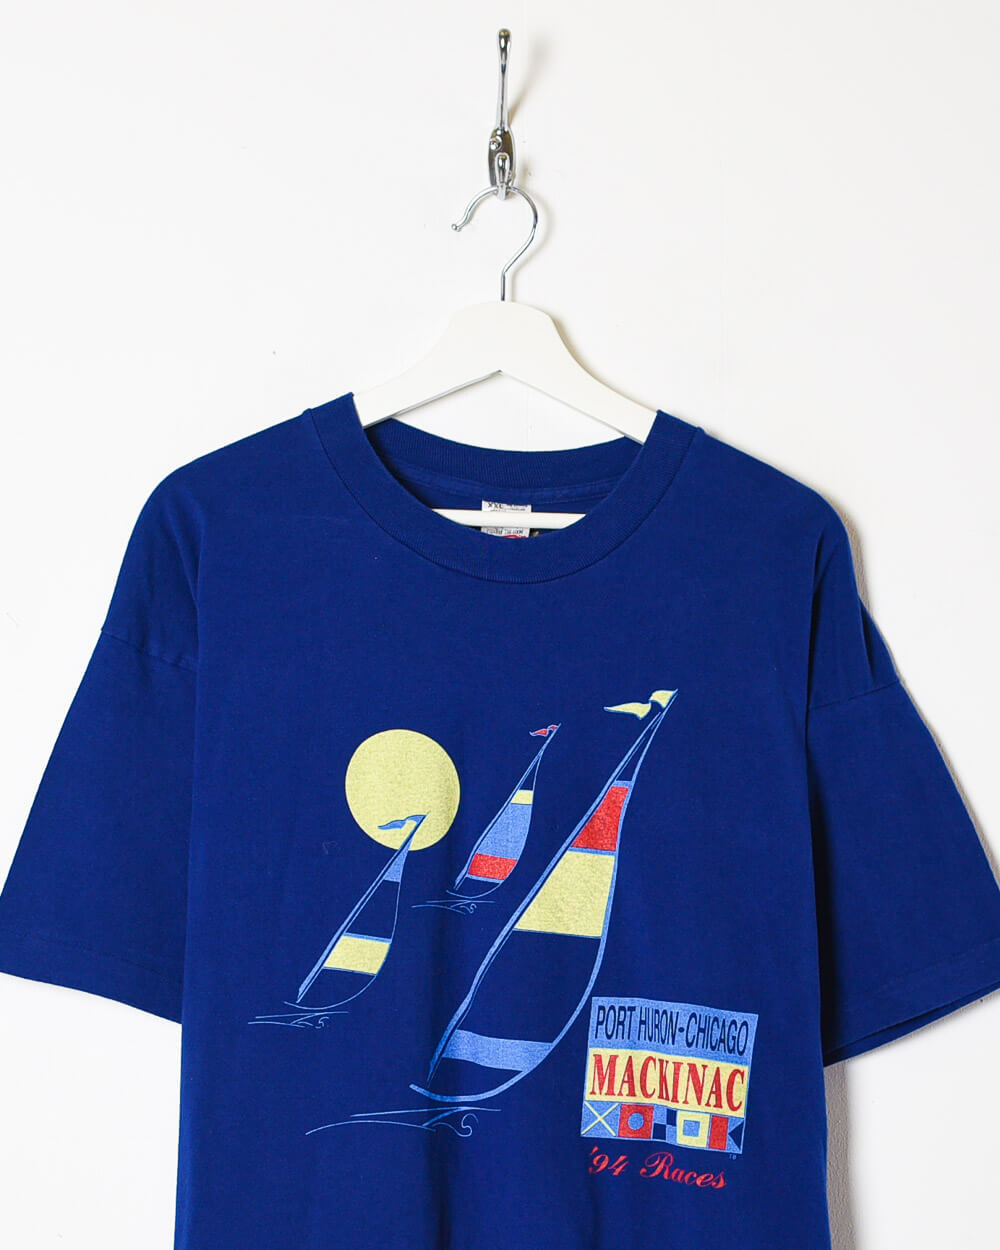 Blue Port Huron Chicago 94 Mackinac Races T-Shirt - XX-Large